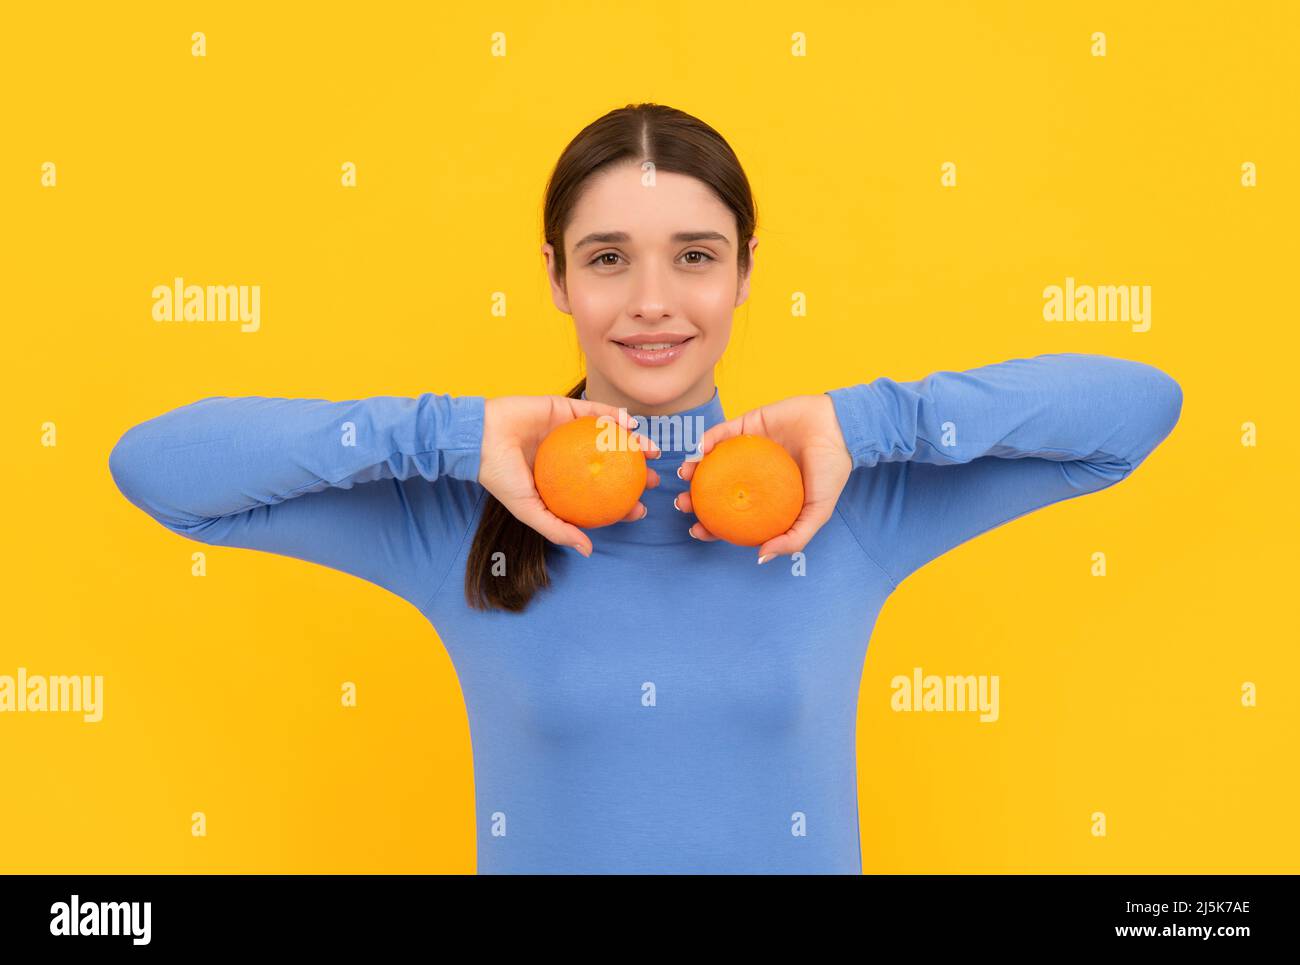 cheerful young woman holding orange citrus fruit on yellow background, skincare Stock Photo